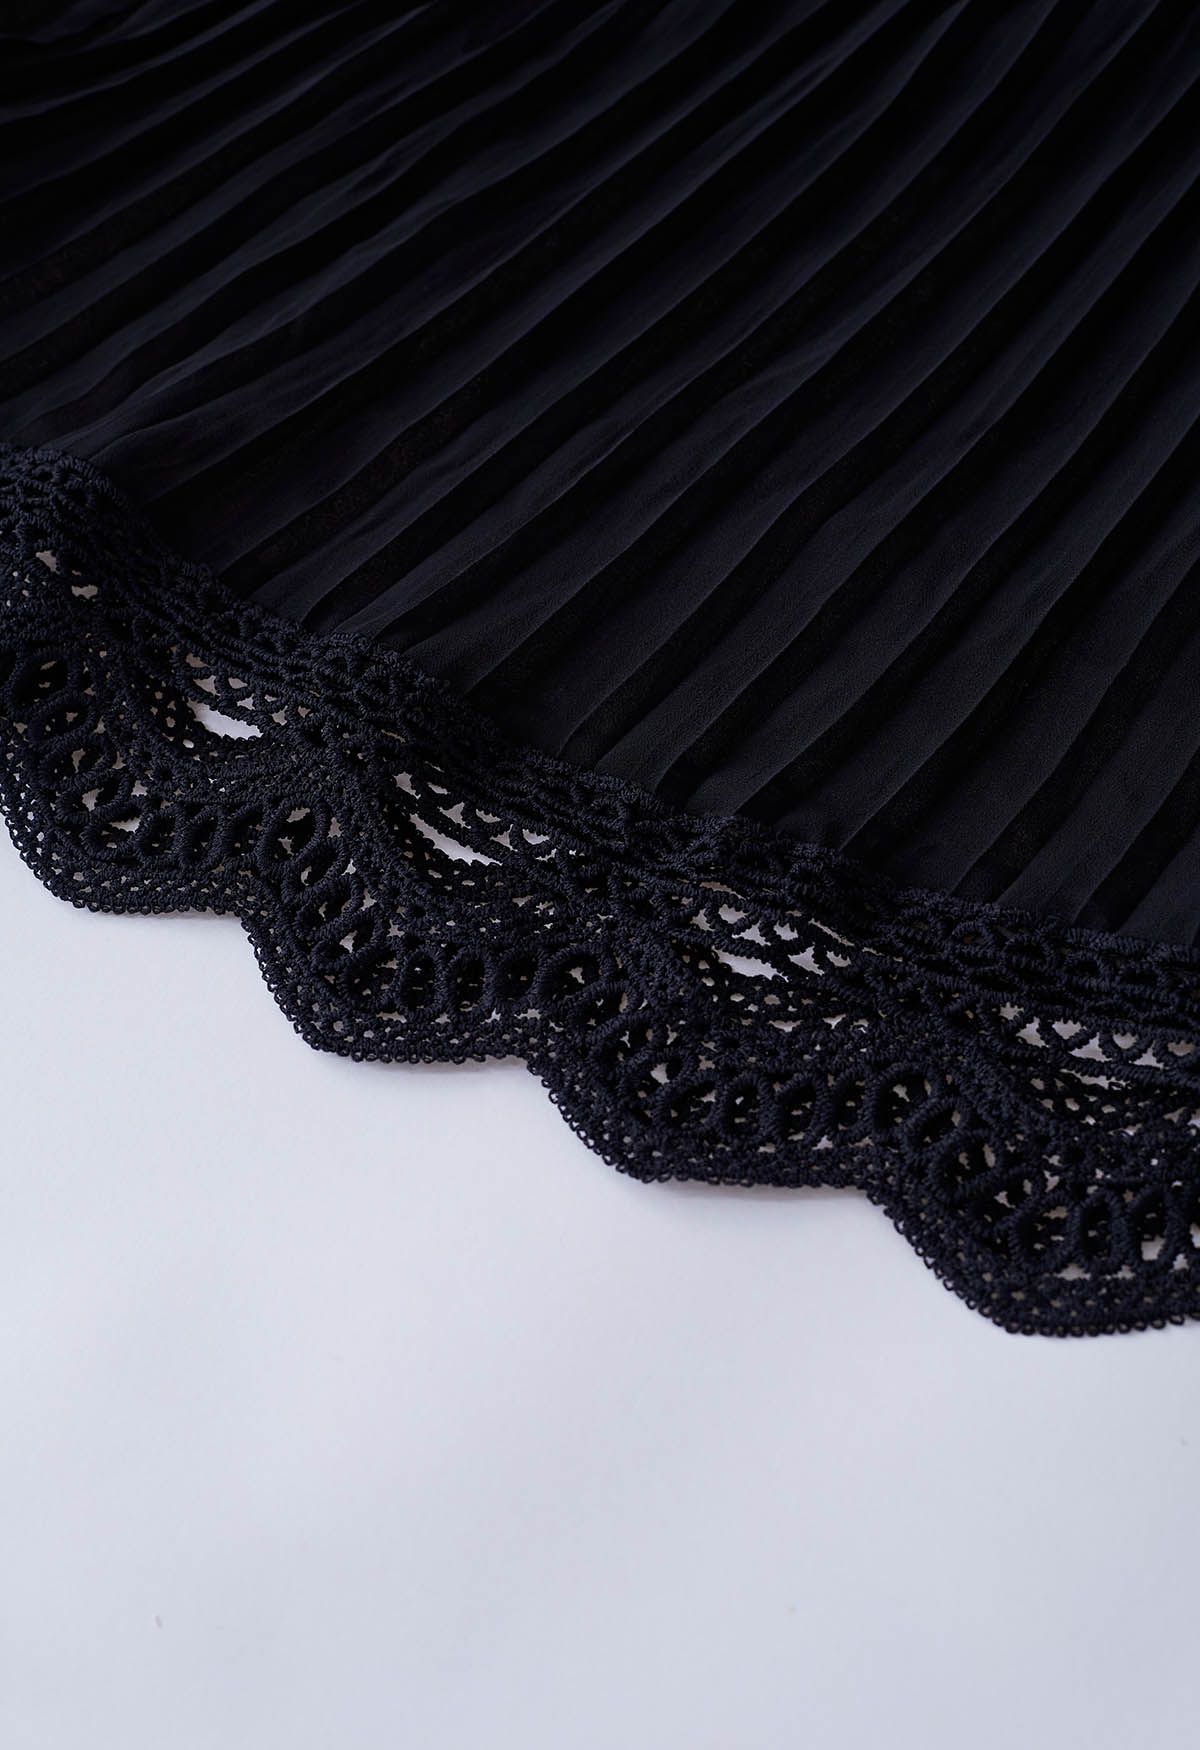 Crochet Lace Pleated Tiered Chiffon Maxi Dress in Black